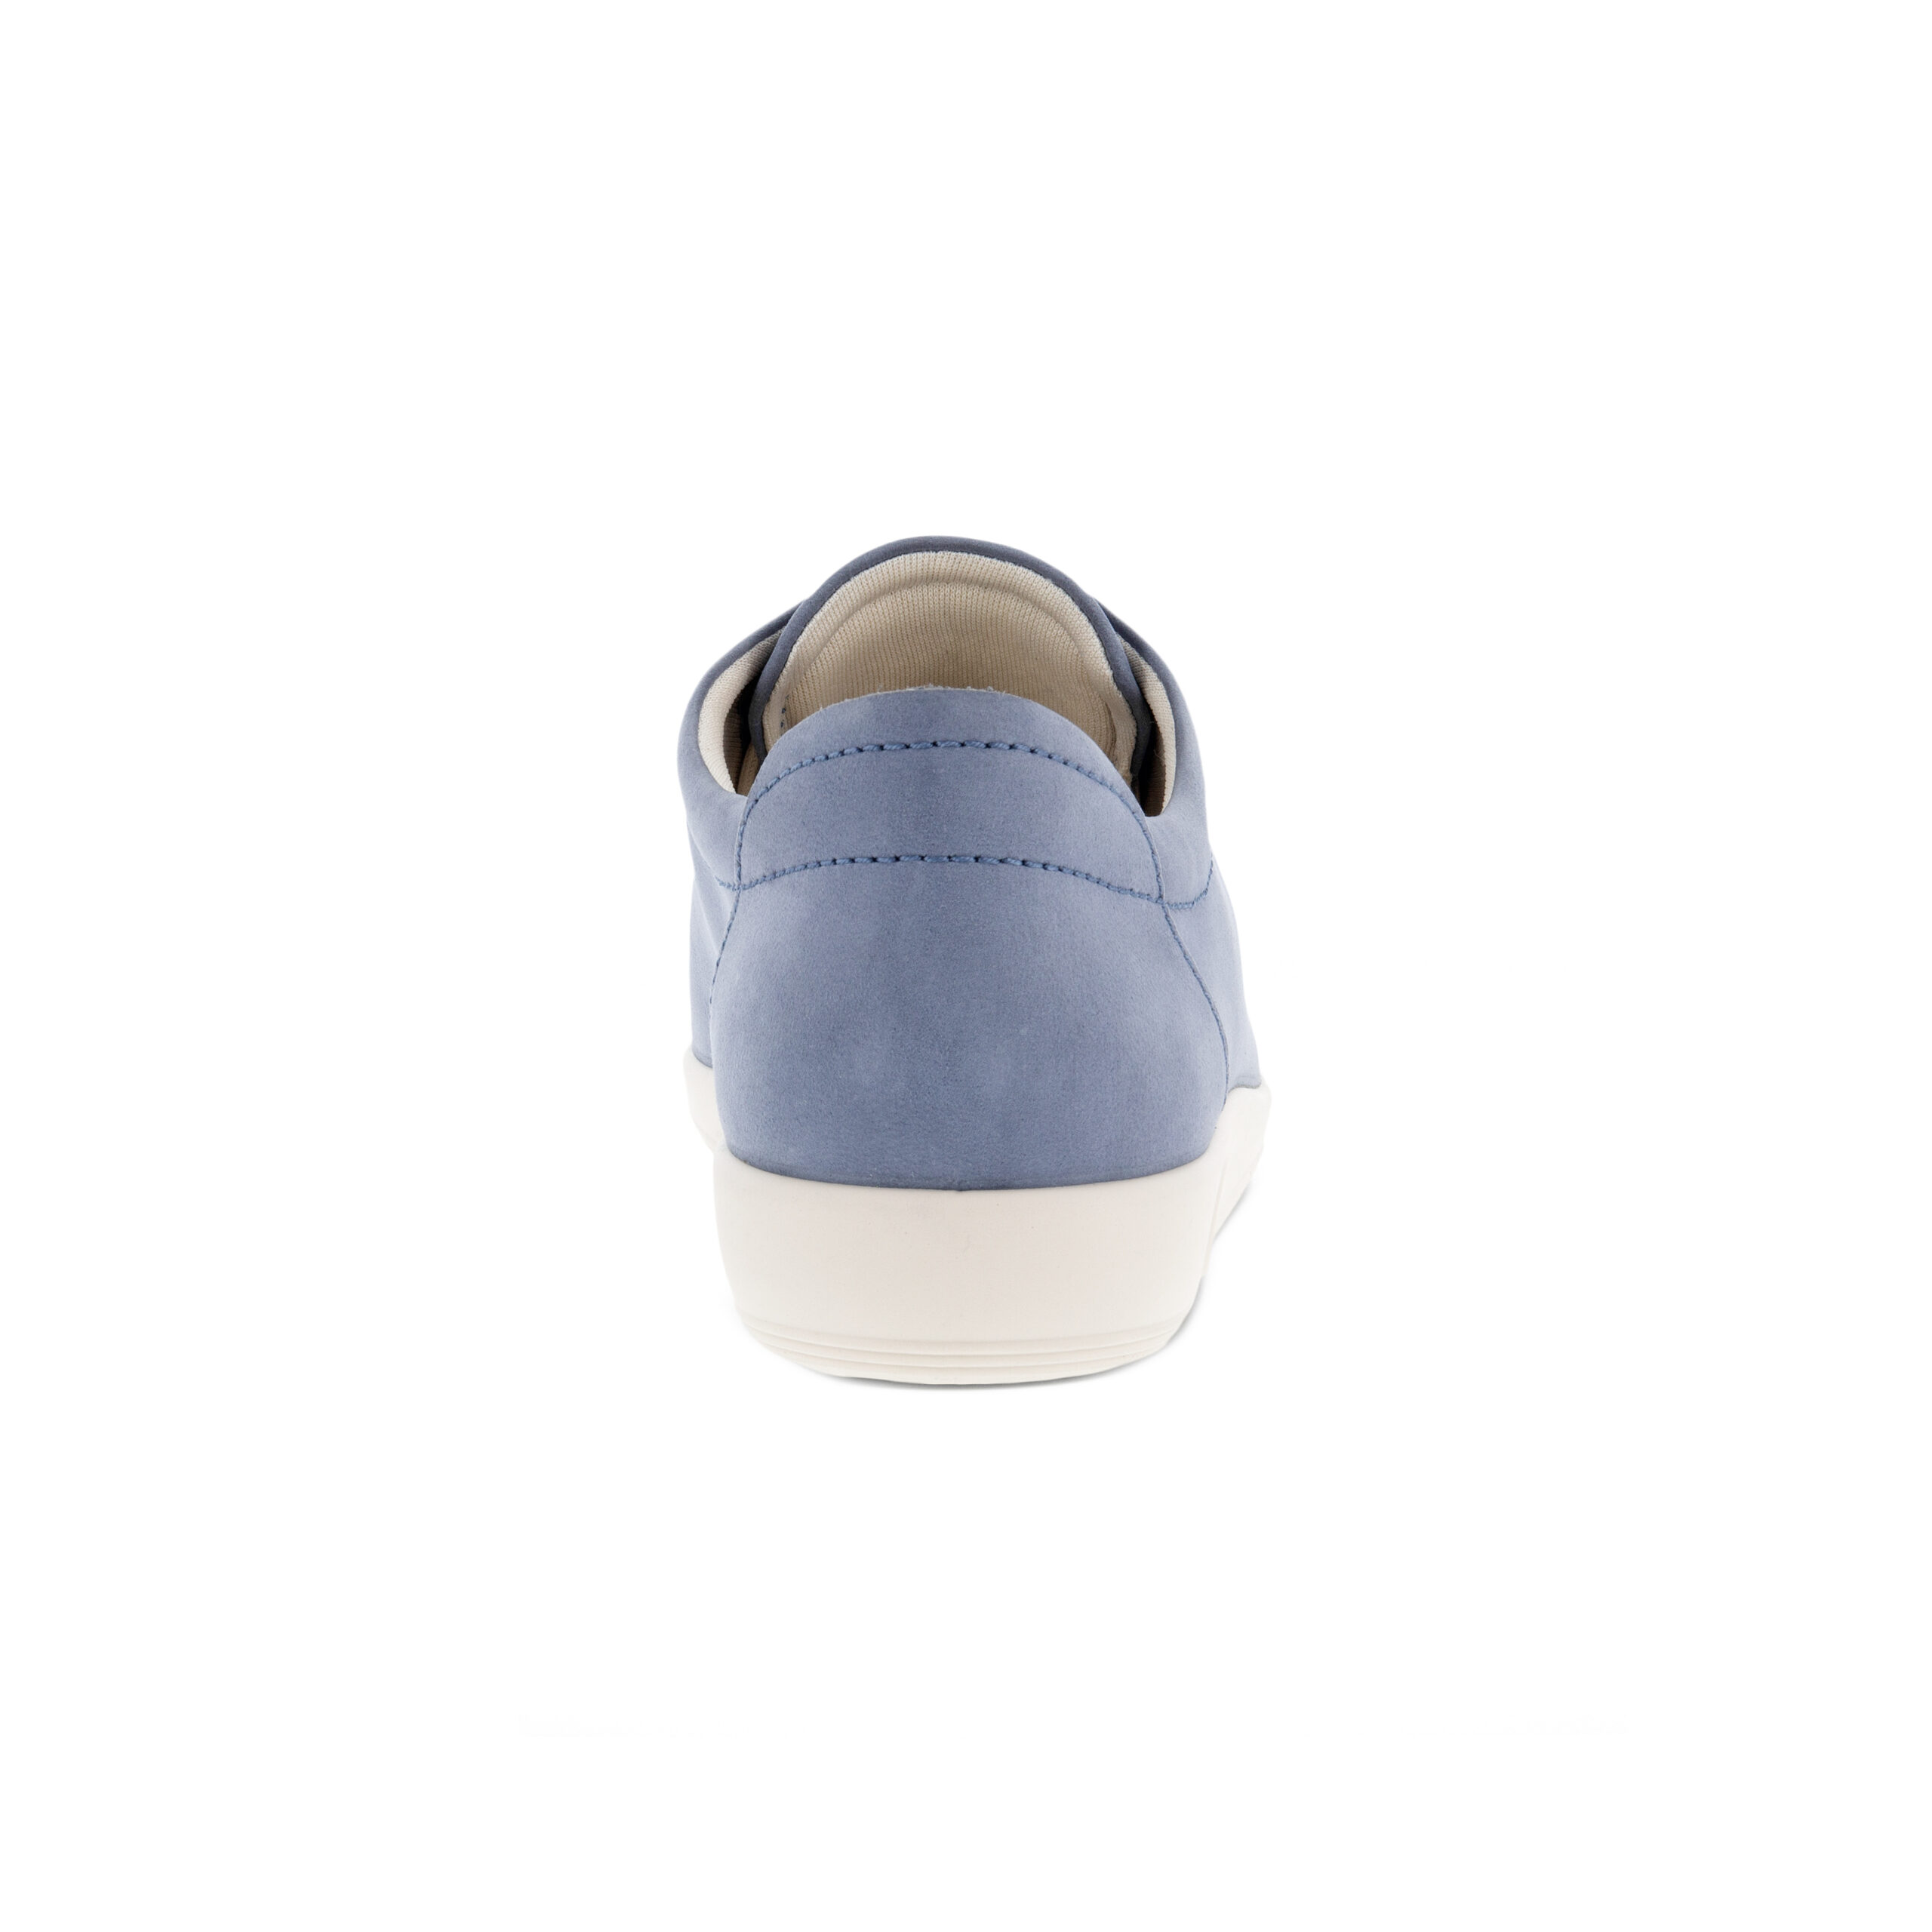 Shop Biom Fjuel Comfortable Walking Footwear Shoes | Blackheath Shoes